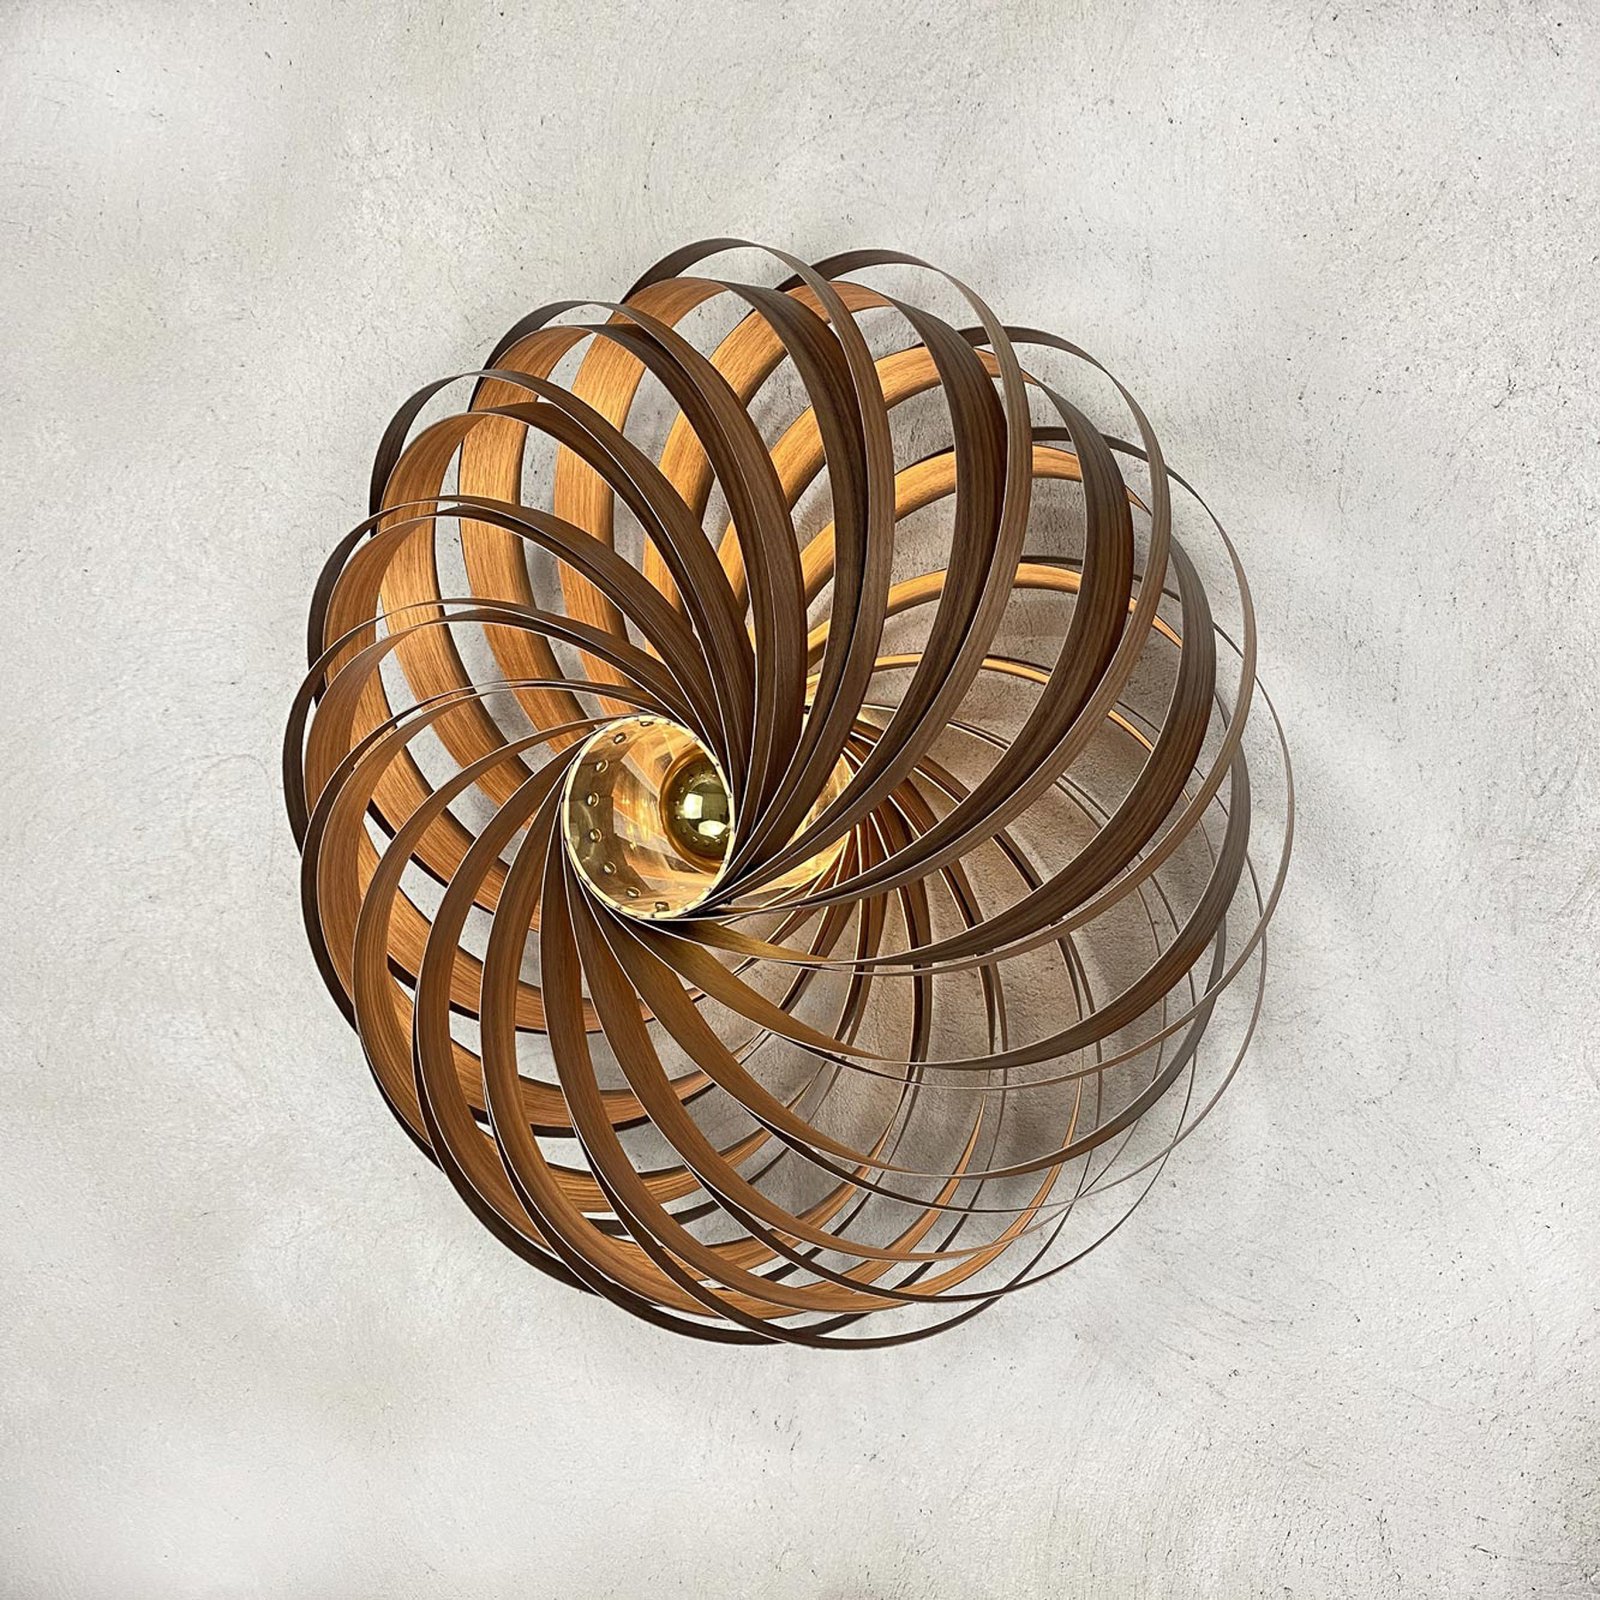 Gofurnit Veneria nástenné svietidlo, orech Ø 70 cm